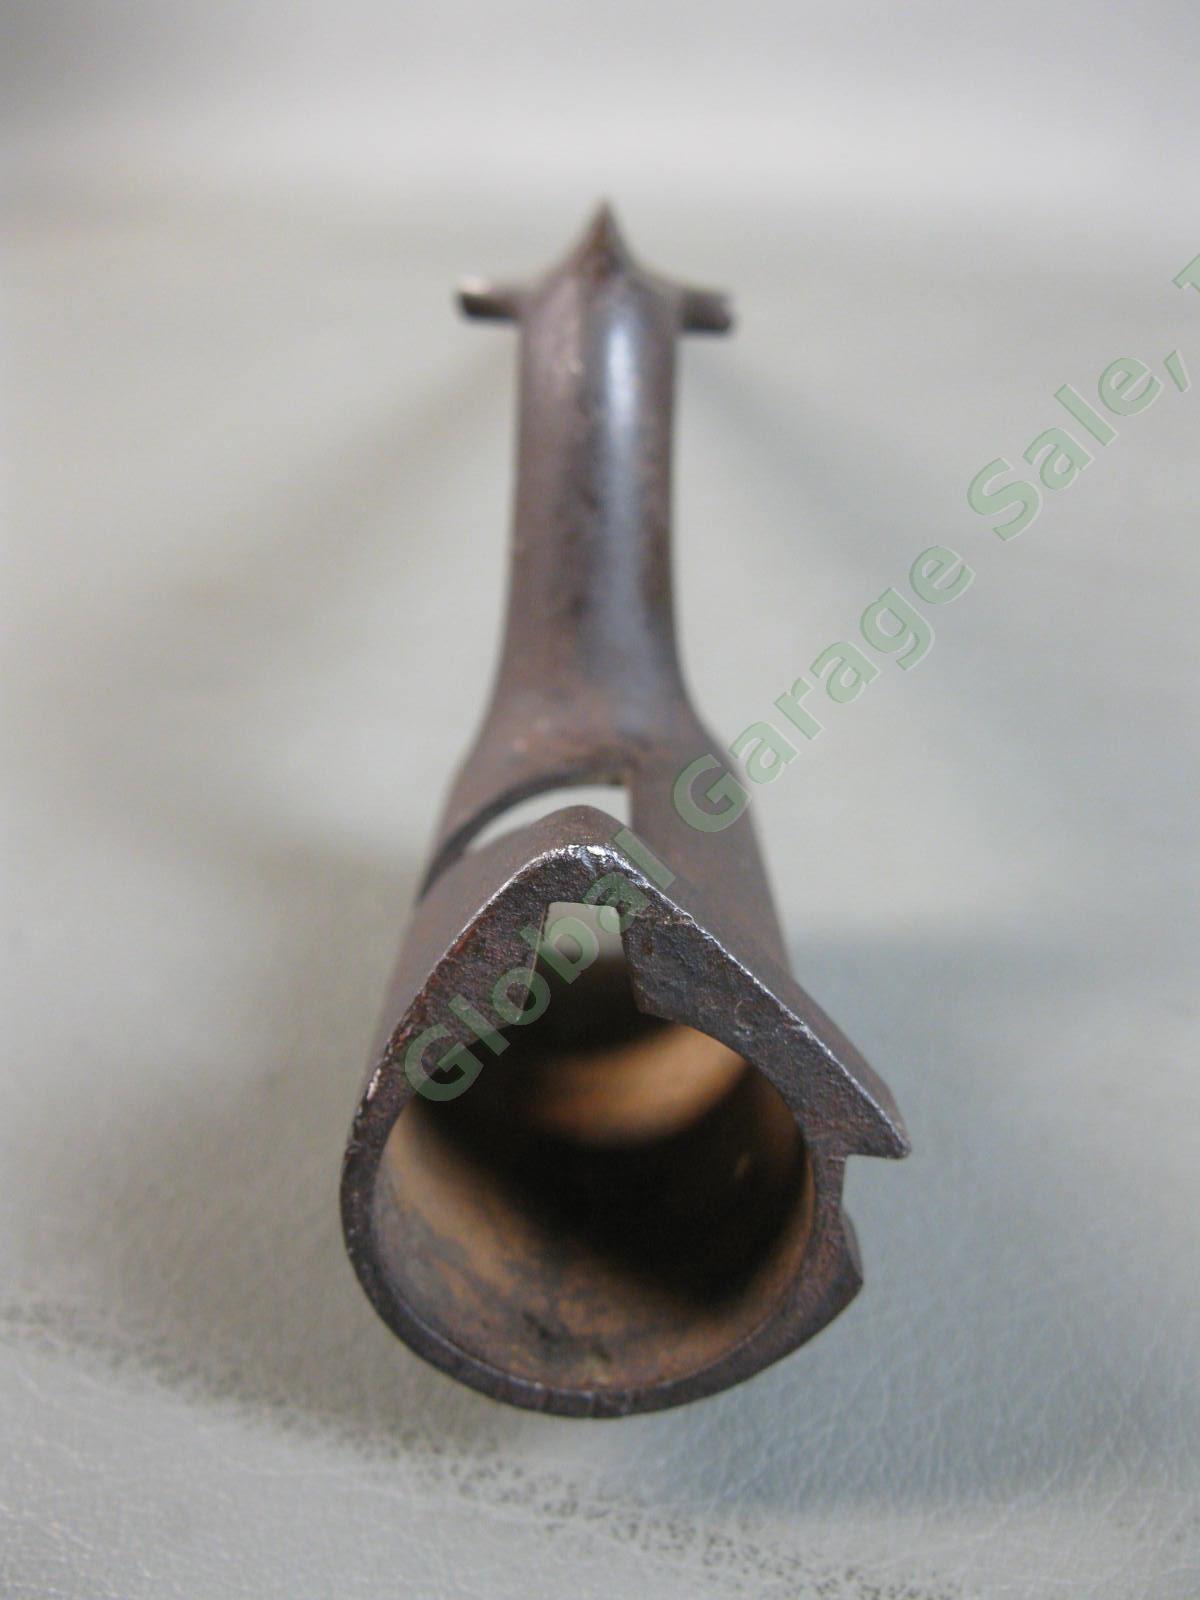 Antique Pre Civil War Socket Bayonet Triangular Fuller Blade Lovell Catch Marked 2